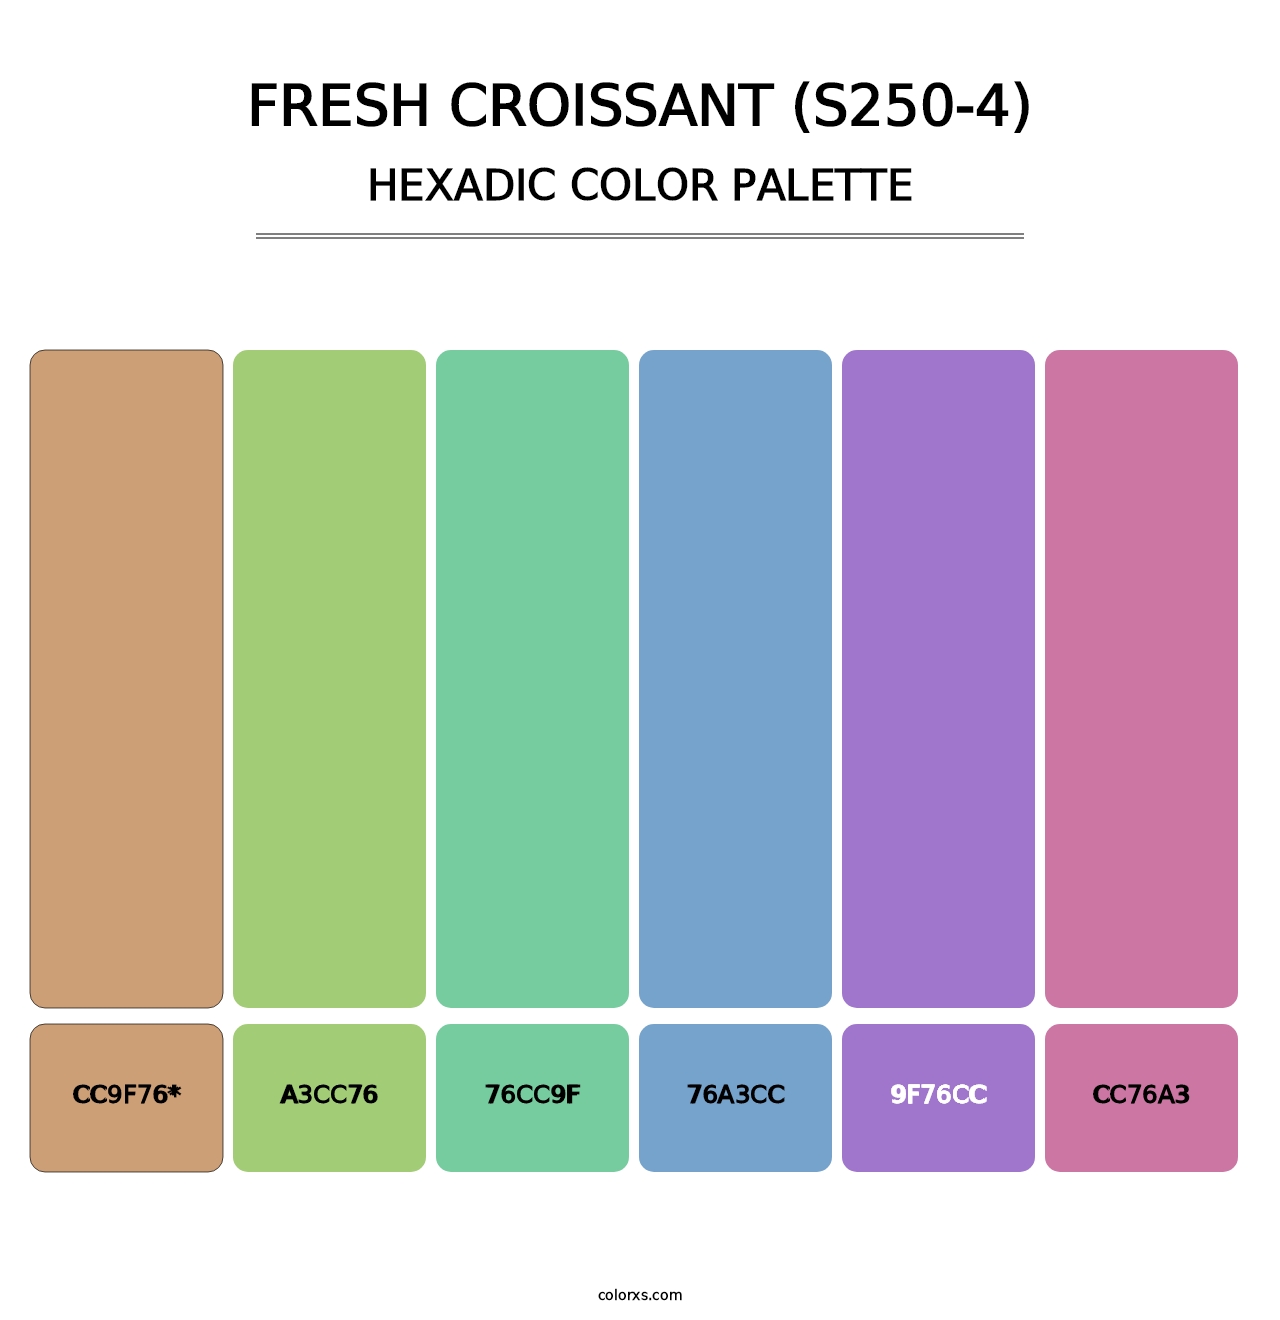 Fresh Croissant (S250-4) - Hexadic Color Palette